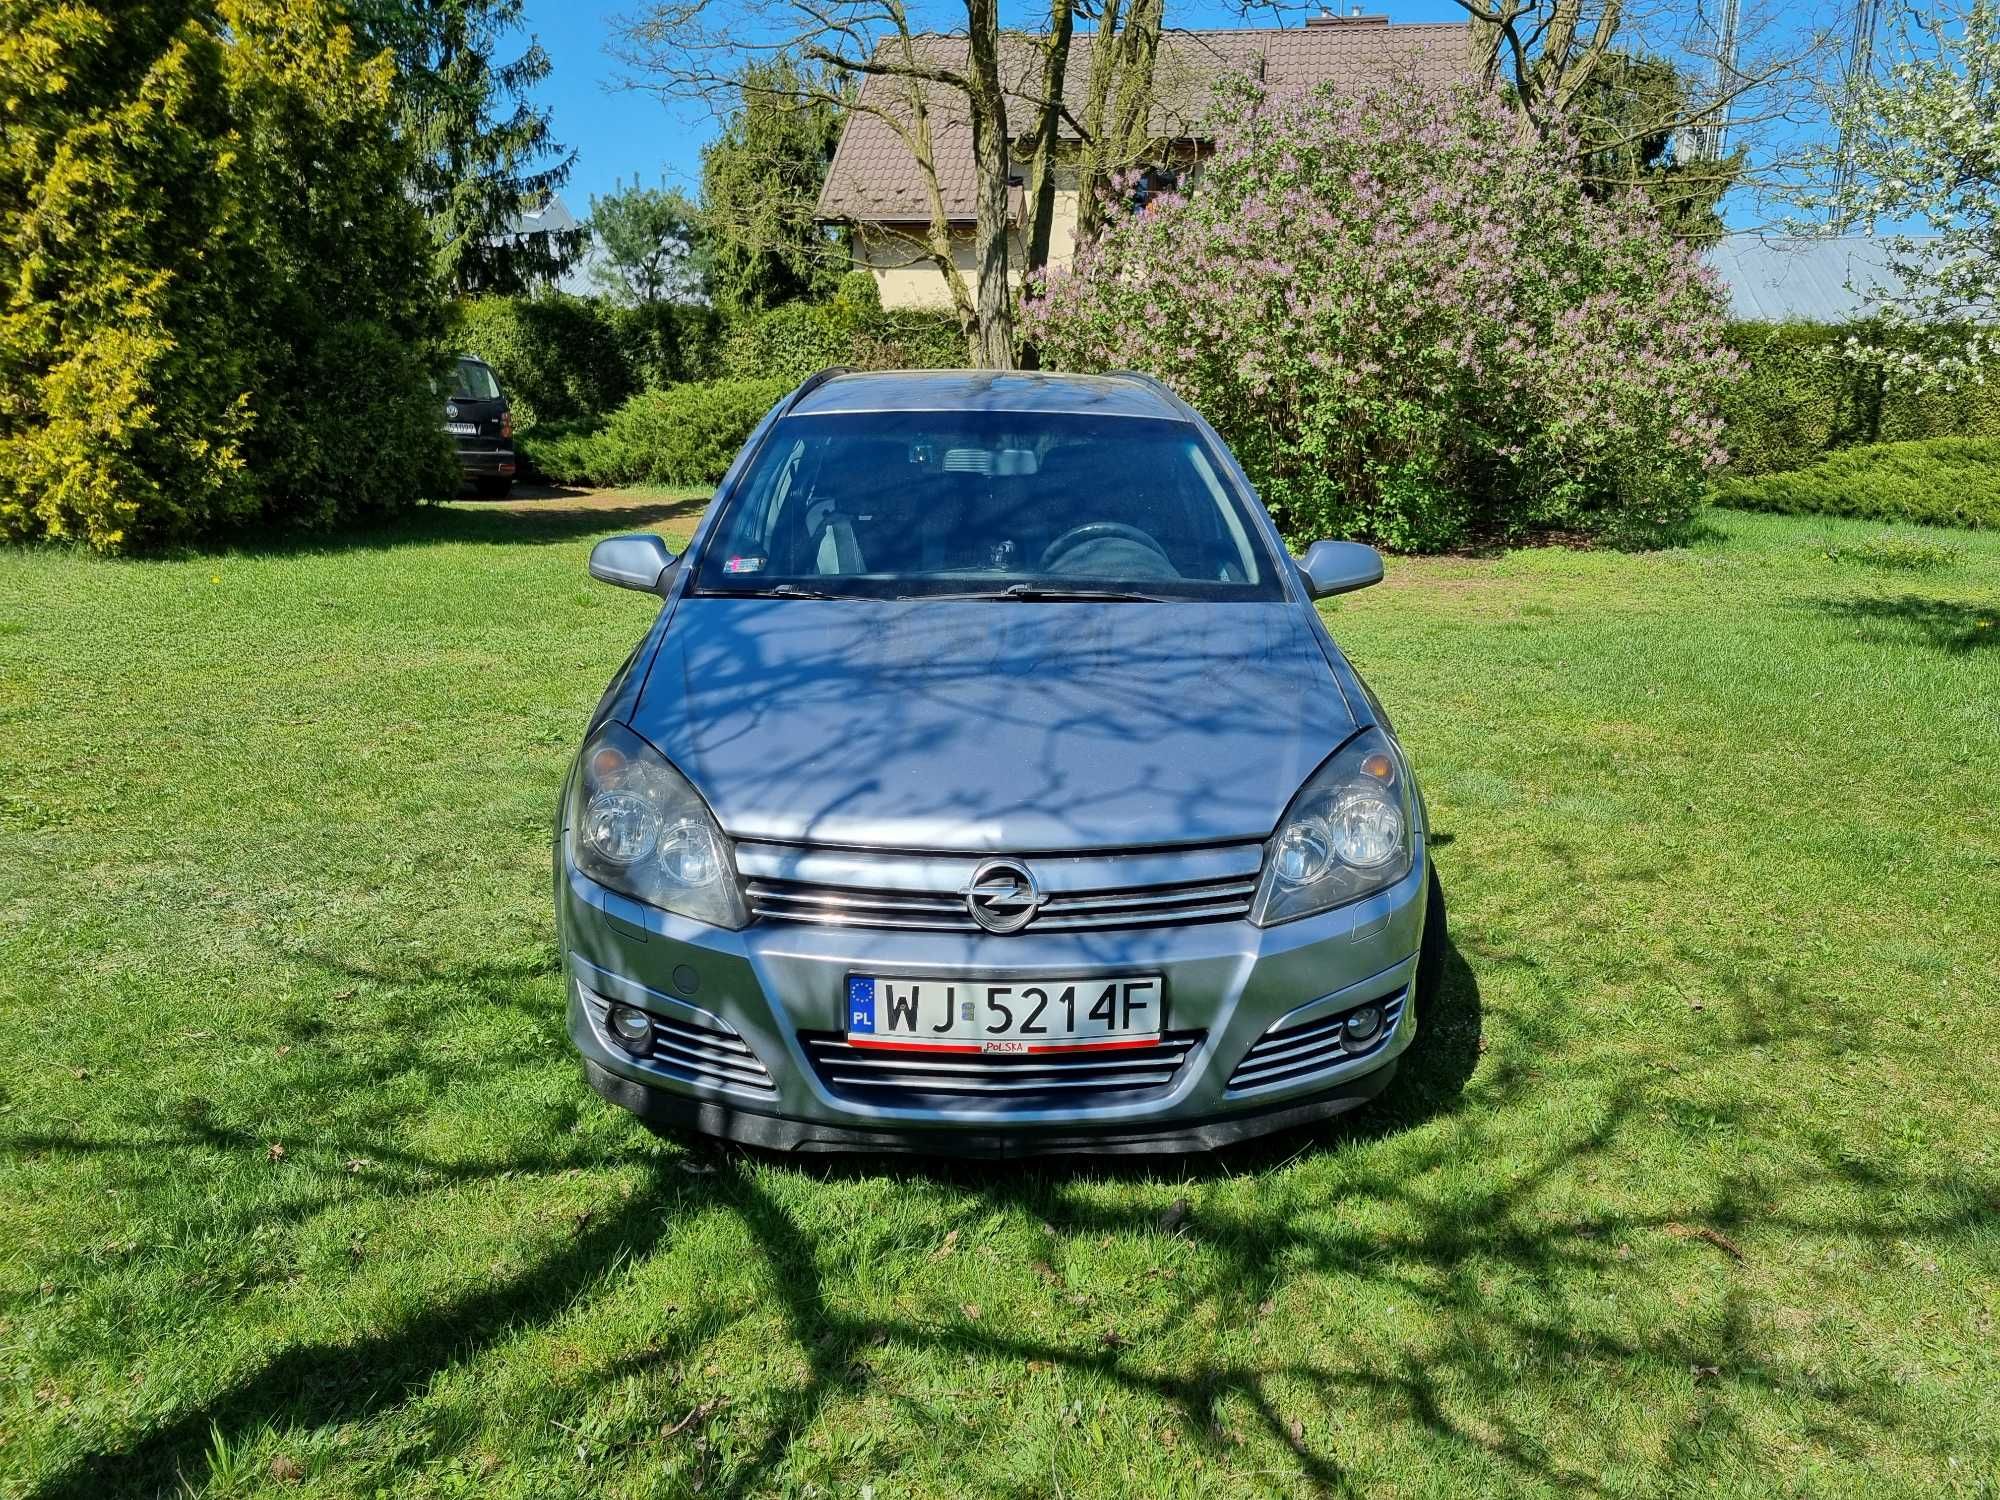 Opel Astra H 1.9 CDTi 2006r 120KM